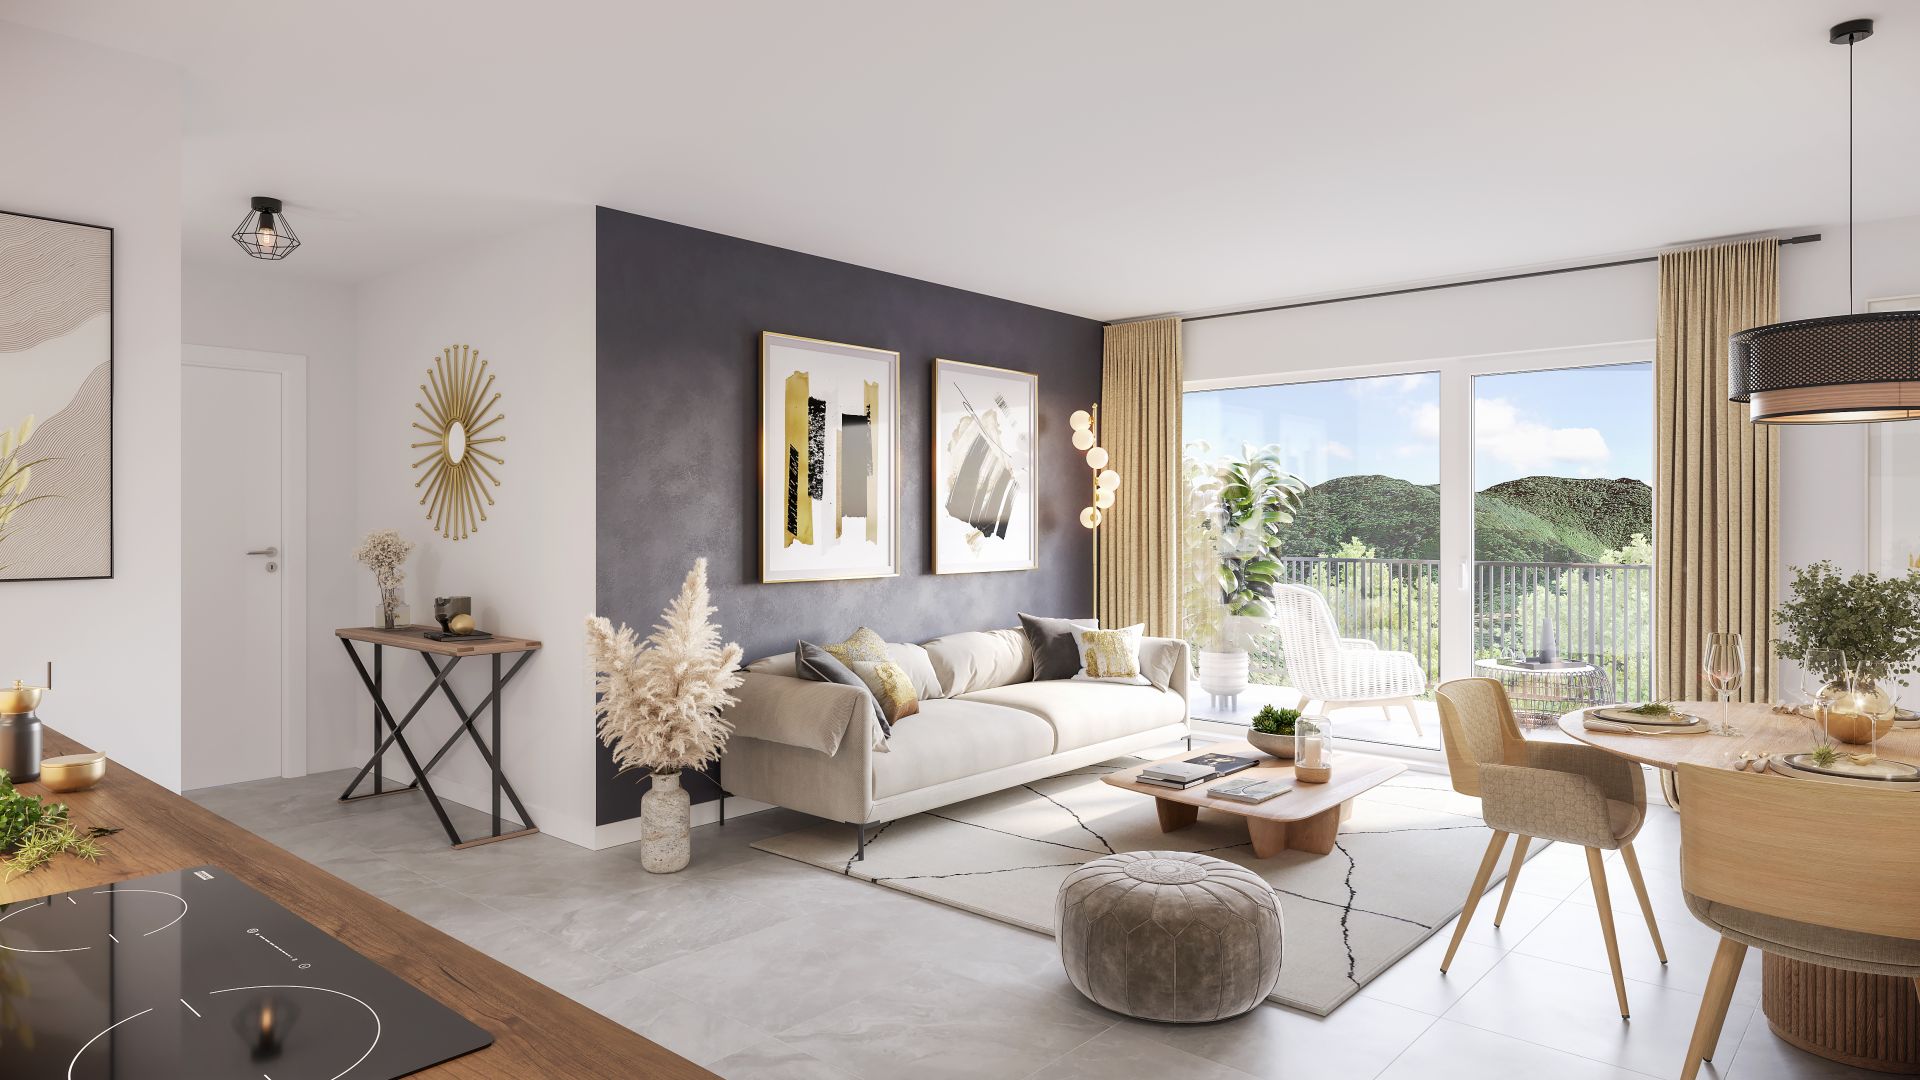 Greencity immobilier - achat appartements neufs du T2 au T3 - Résidence Le Montarly - Albertville 73200  